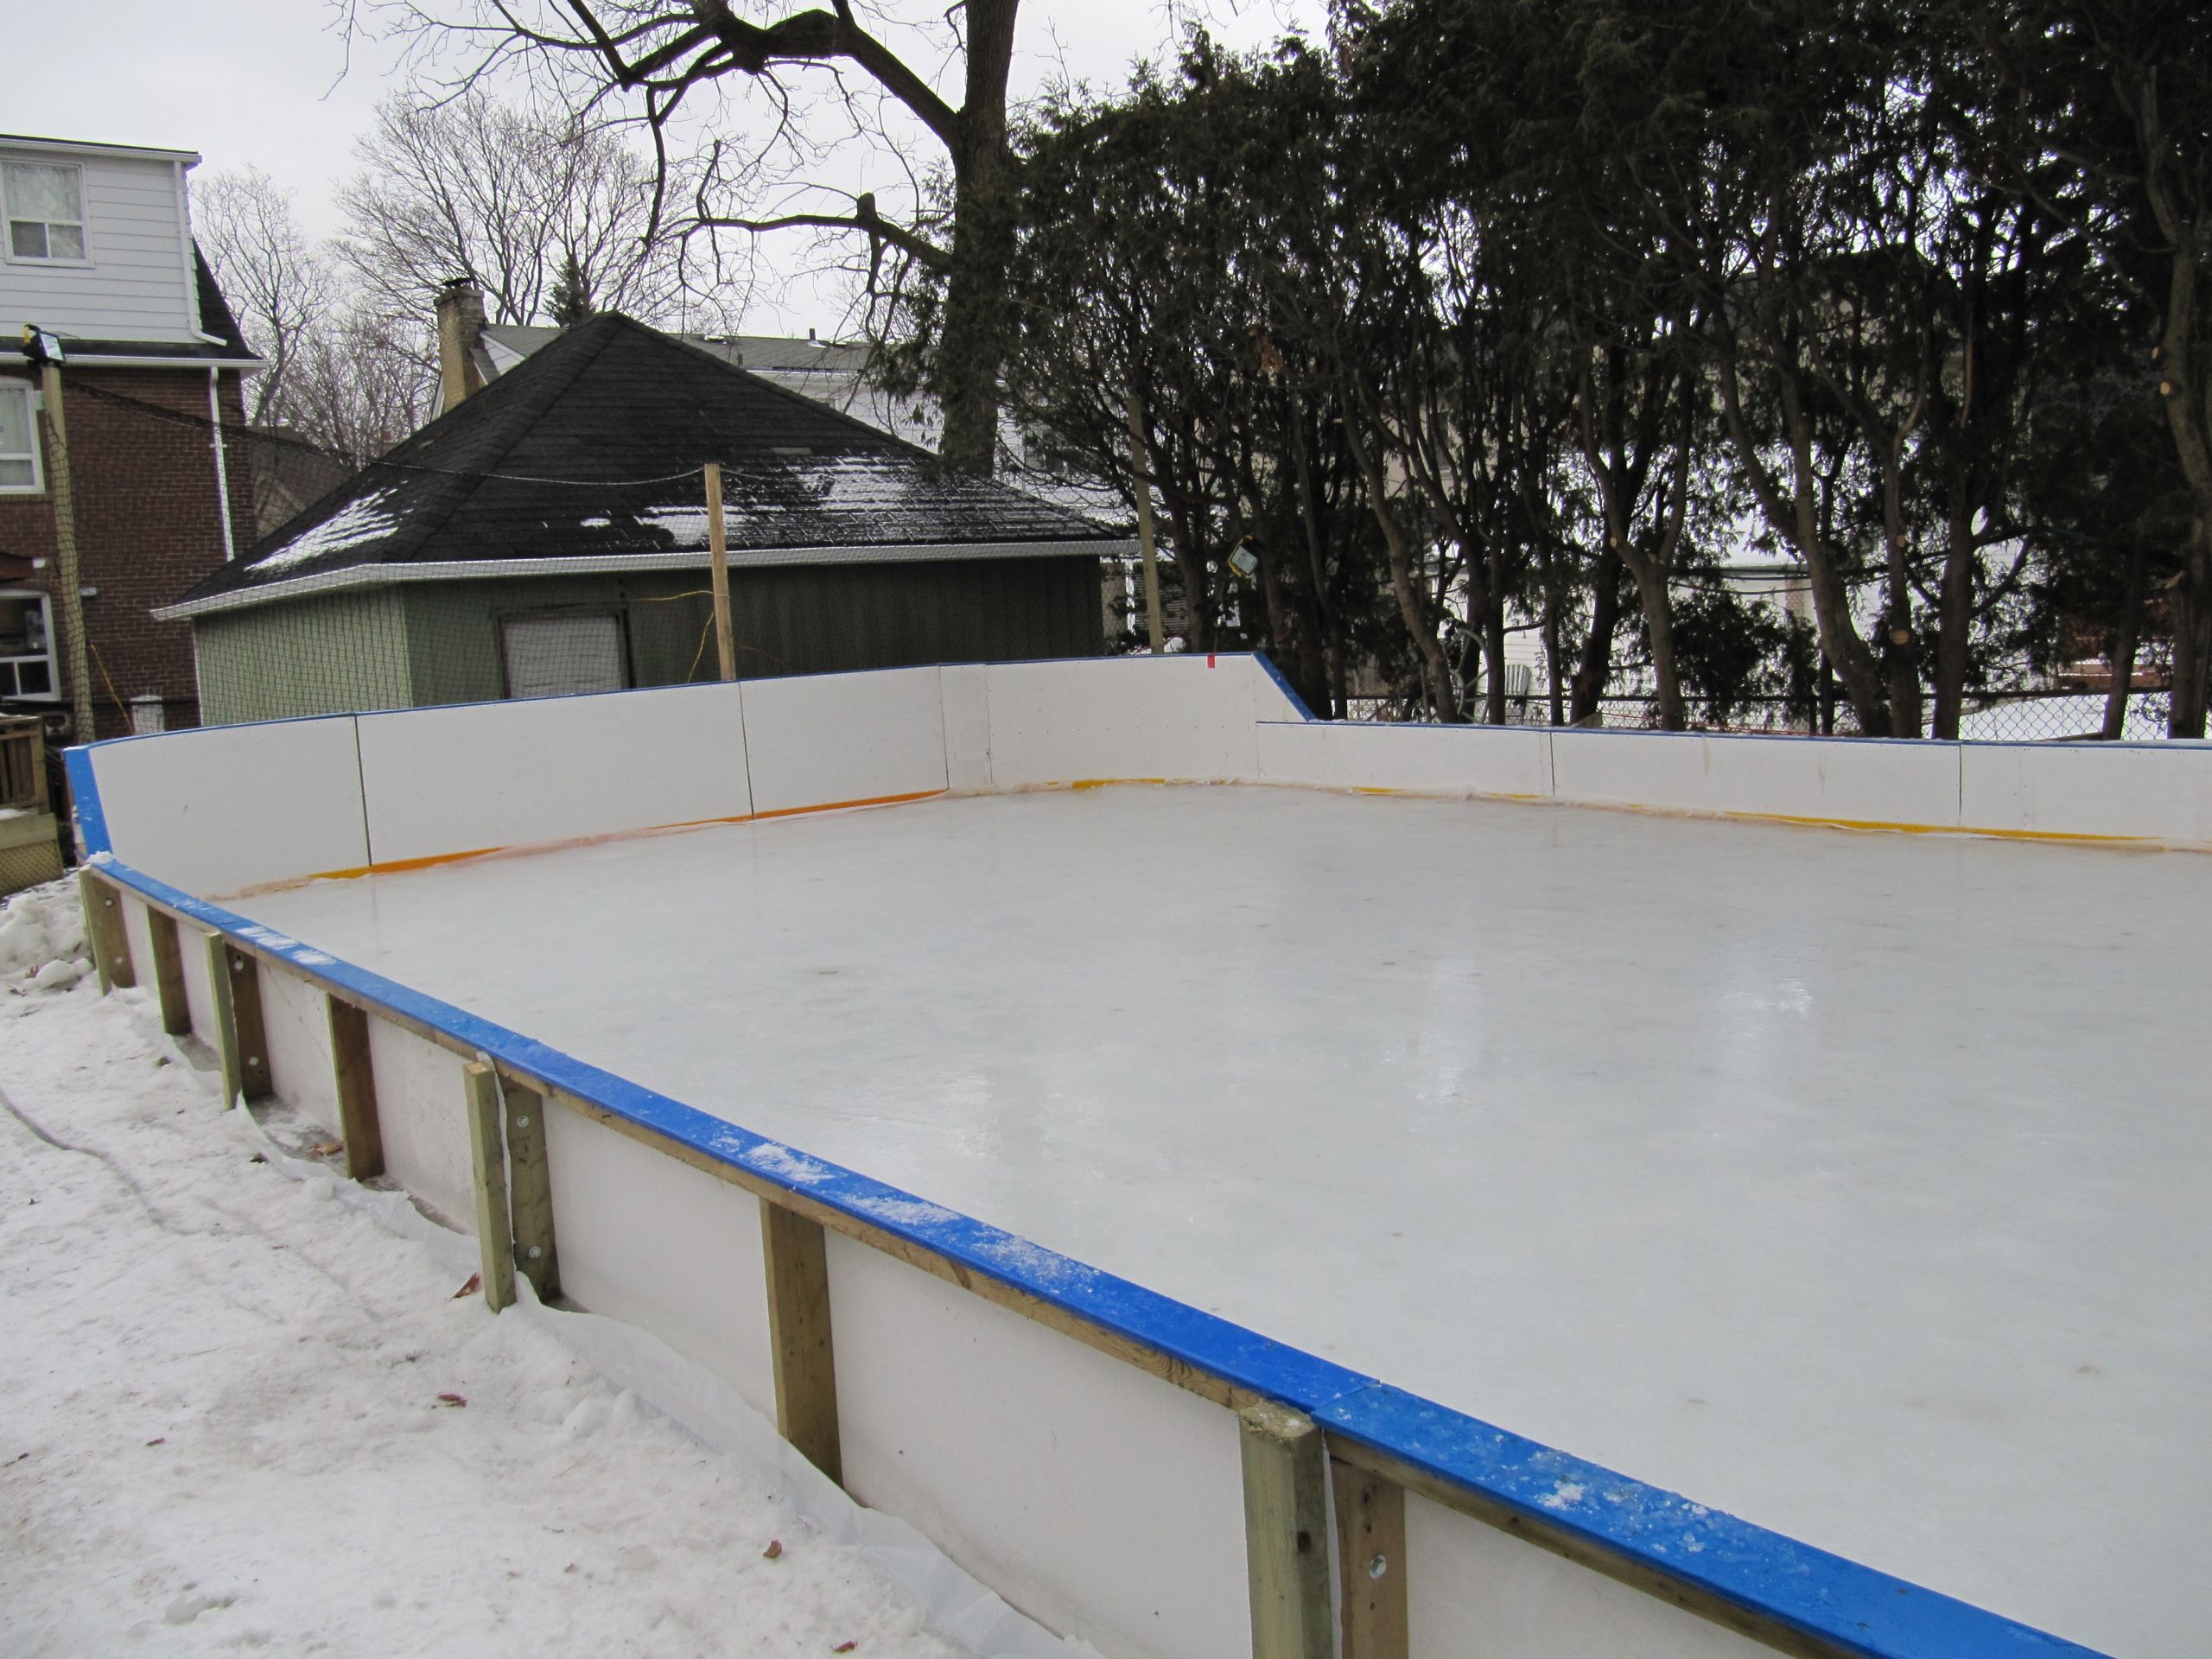 Backyard Ice Rinks
 Backyard ice rink boards